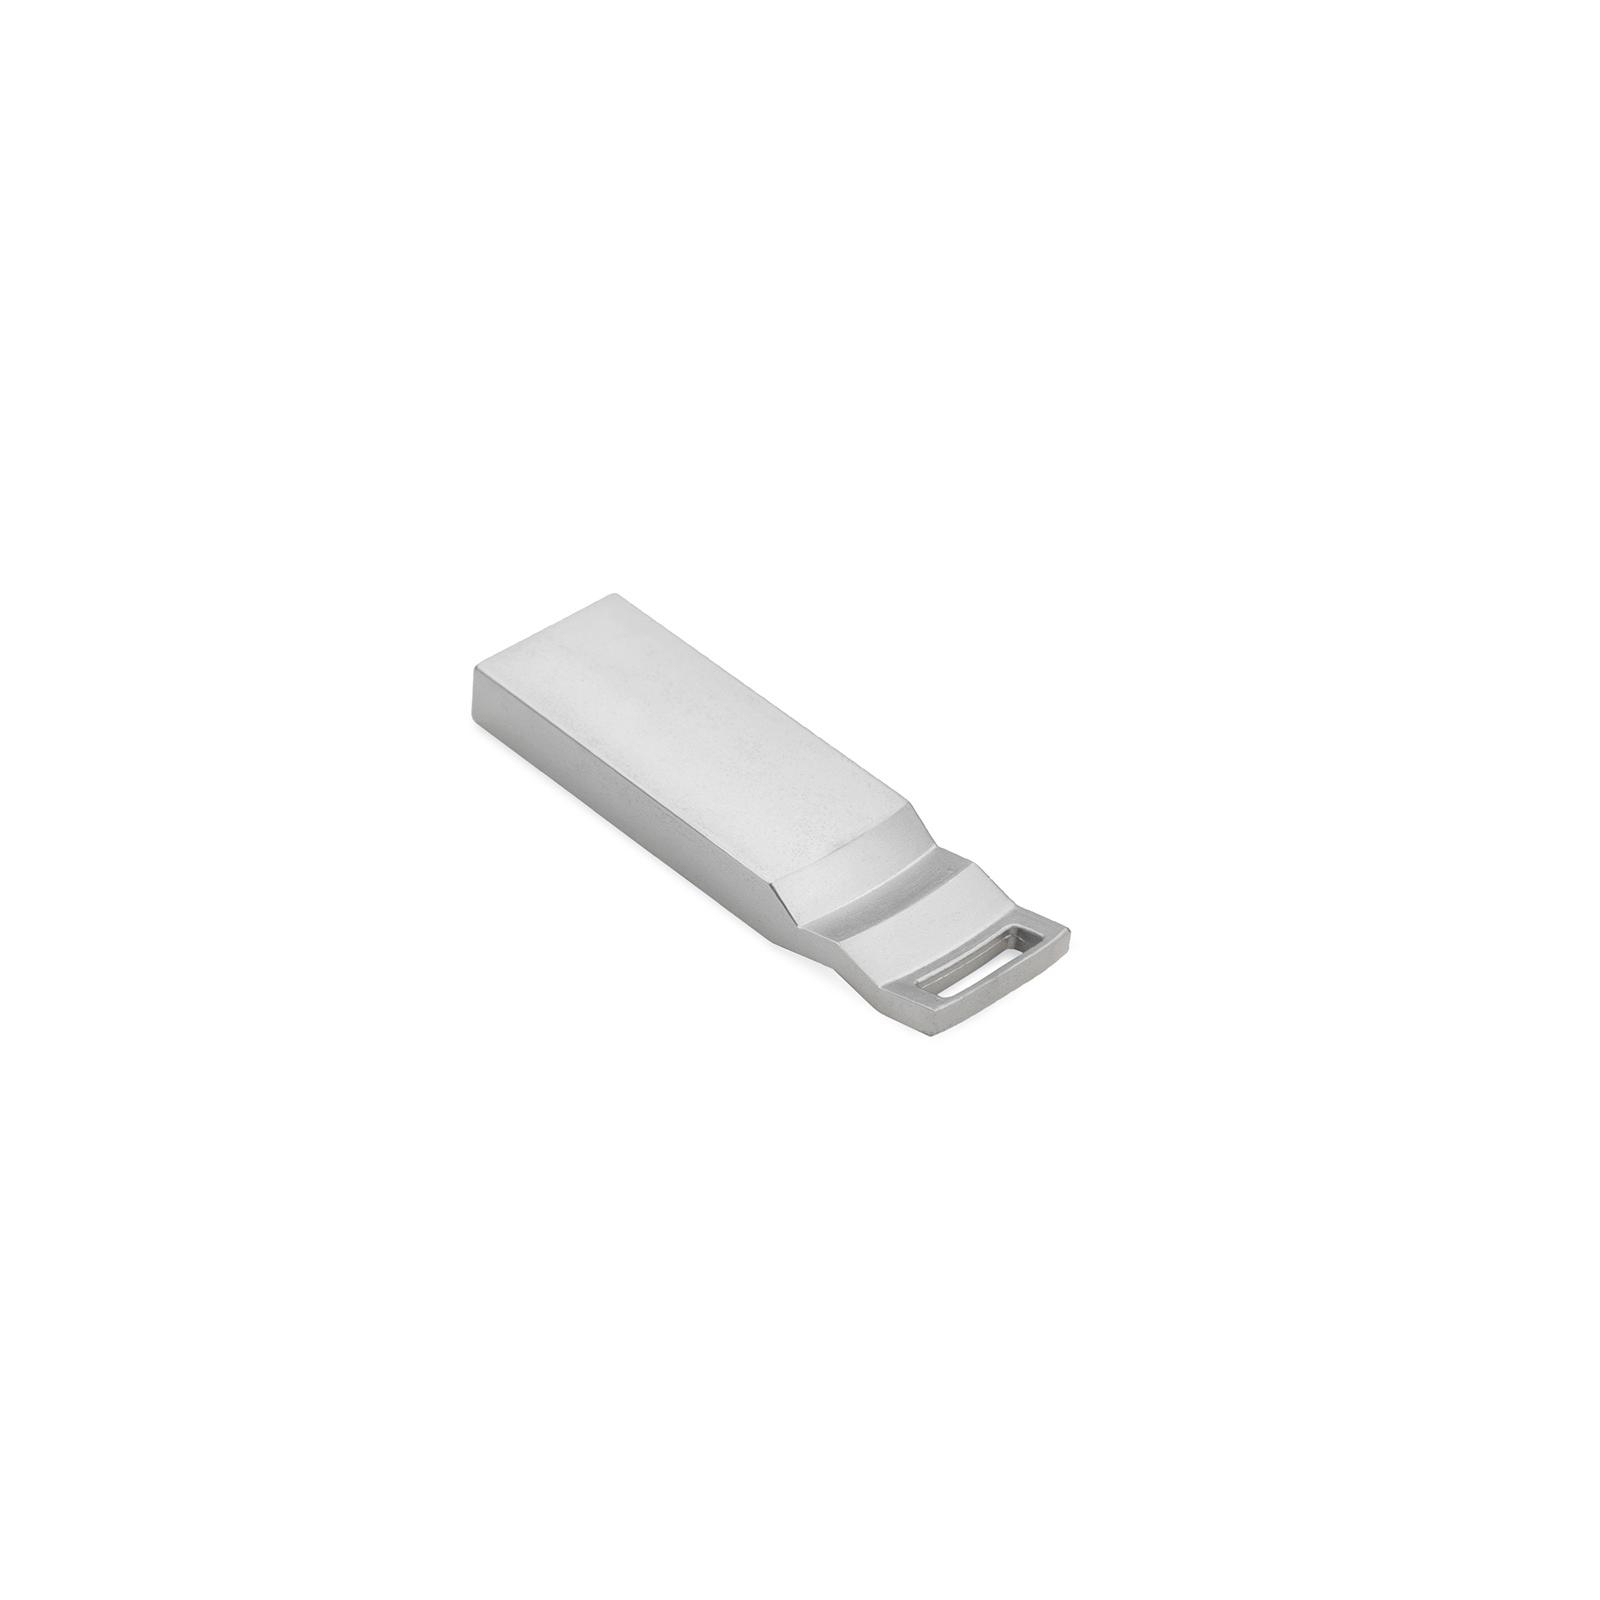 USB флеш накопитель eXceleram 64GB U2 Series Silver USB 2.0 (EXP2U2U2S64) изображение 3